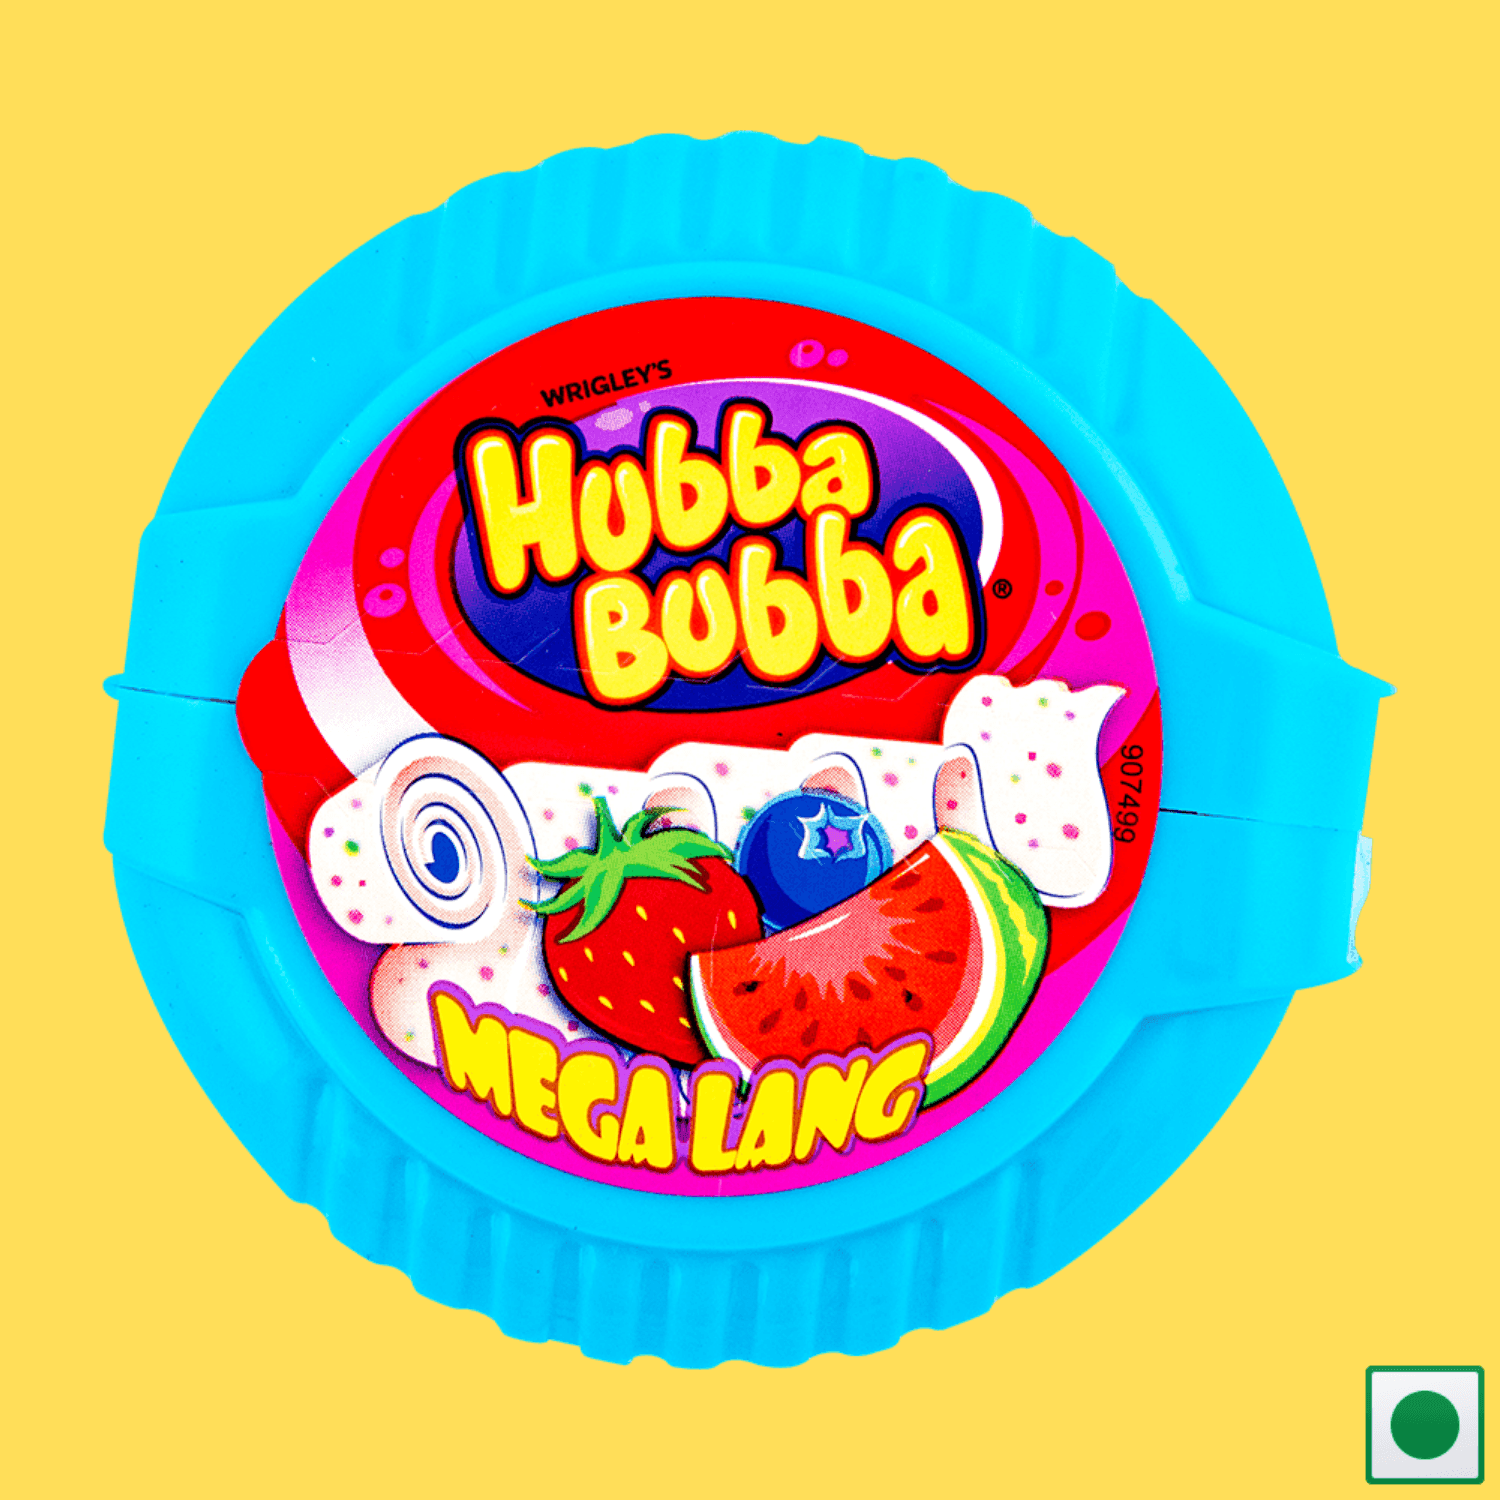 Hubba Bubba Mega Lang, 56g (Imported) - Super 7 Mart